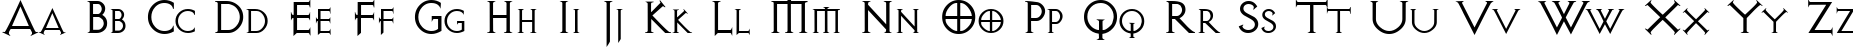 Пример написания английского алфавита шрифтом AvalonQuest